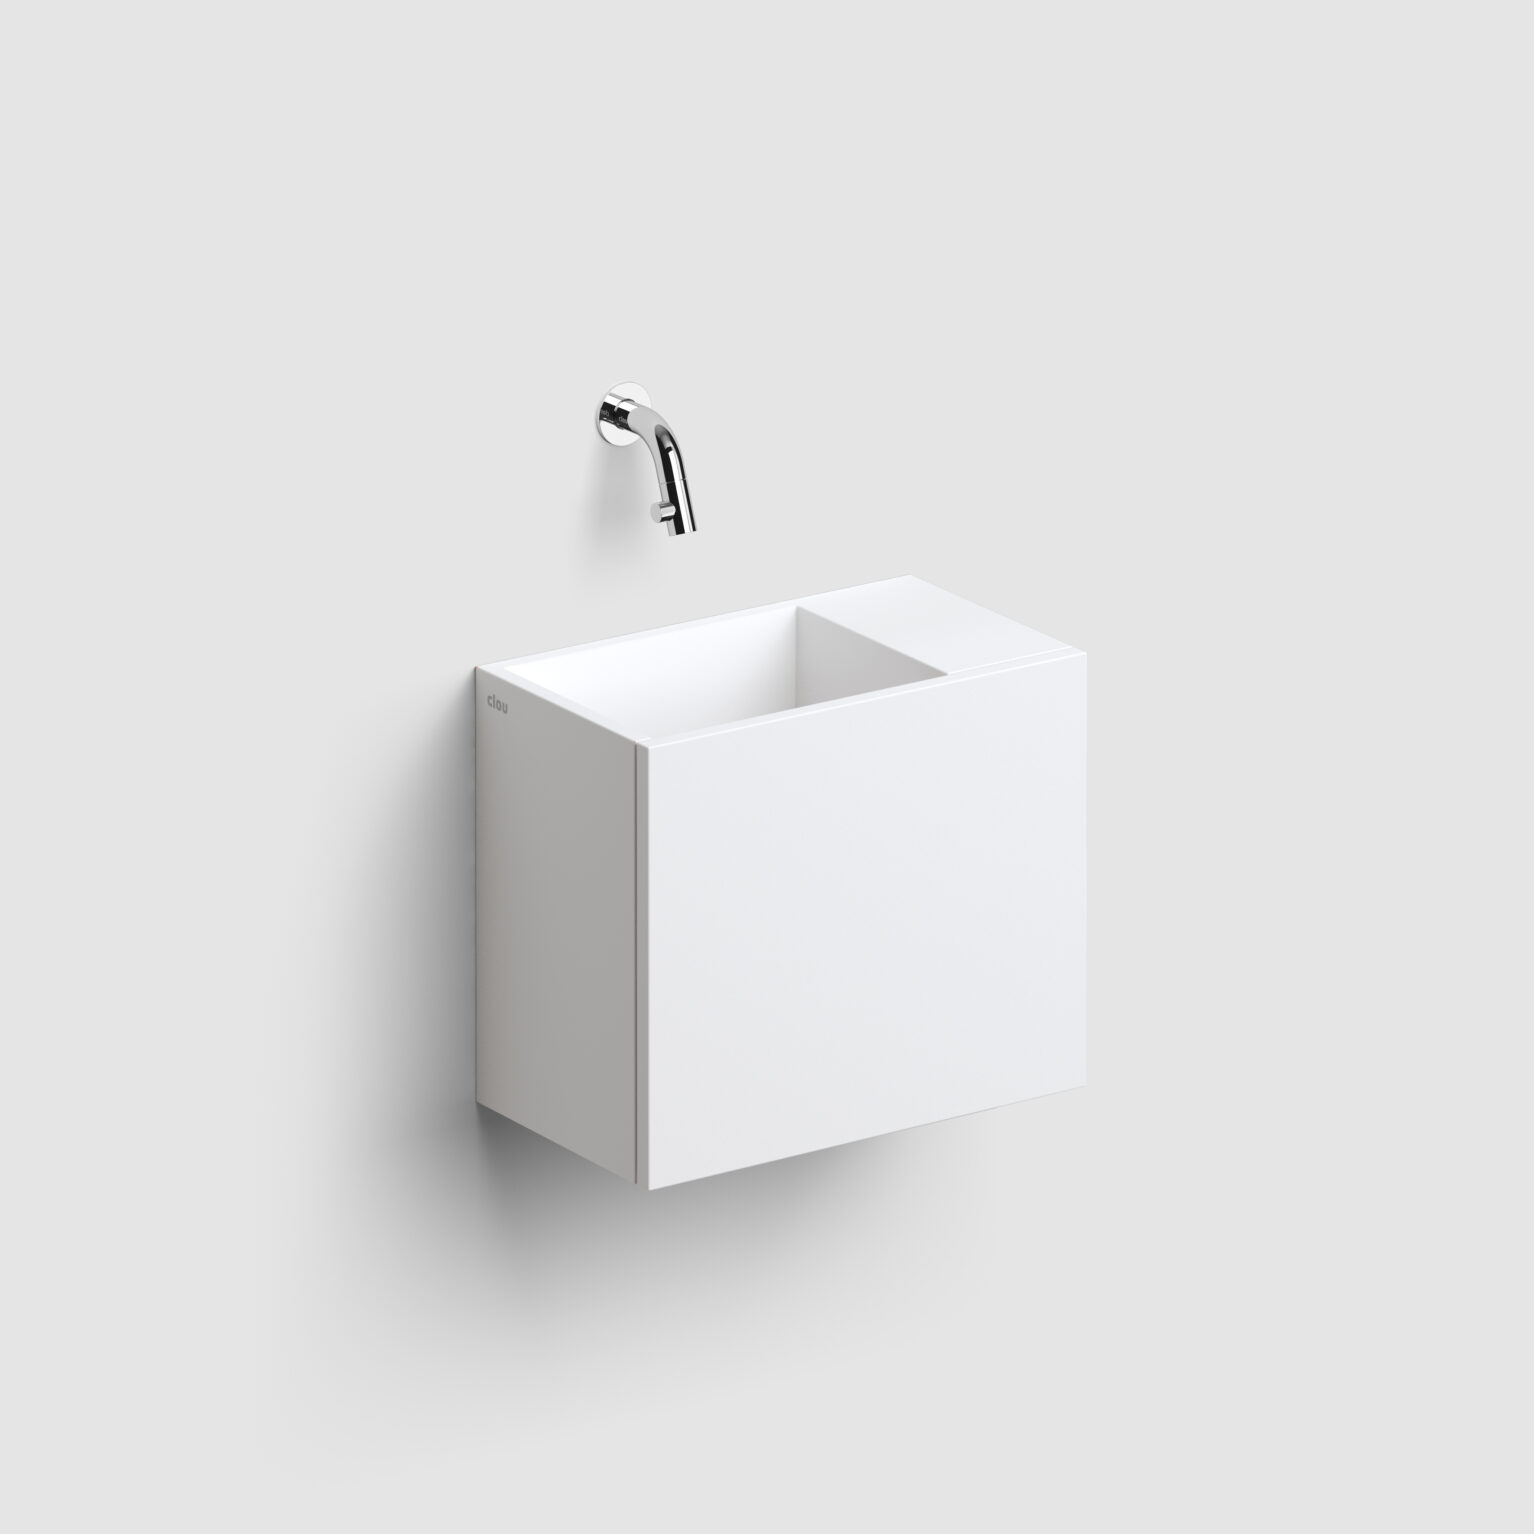 fontein-meubel-kastje-wit-toilet-badkamer-luxe-sanitair-Nifty-rechts-clou-CL03131120755R-mat-wit-aluite-gelakt-36cm-Flush-afvoerplug-handdoekhouder-Kaldur-fonteinkraan-matwit-CL060500129